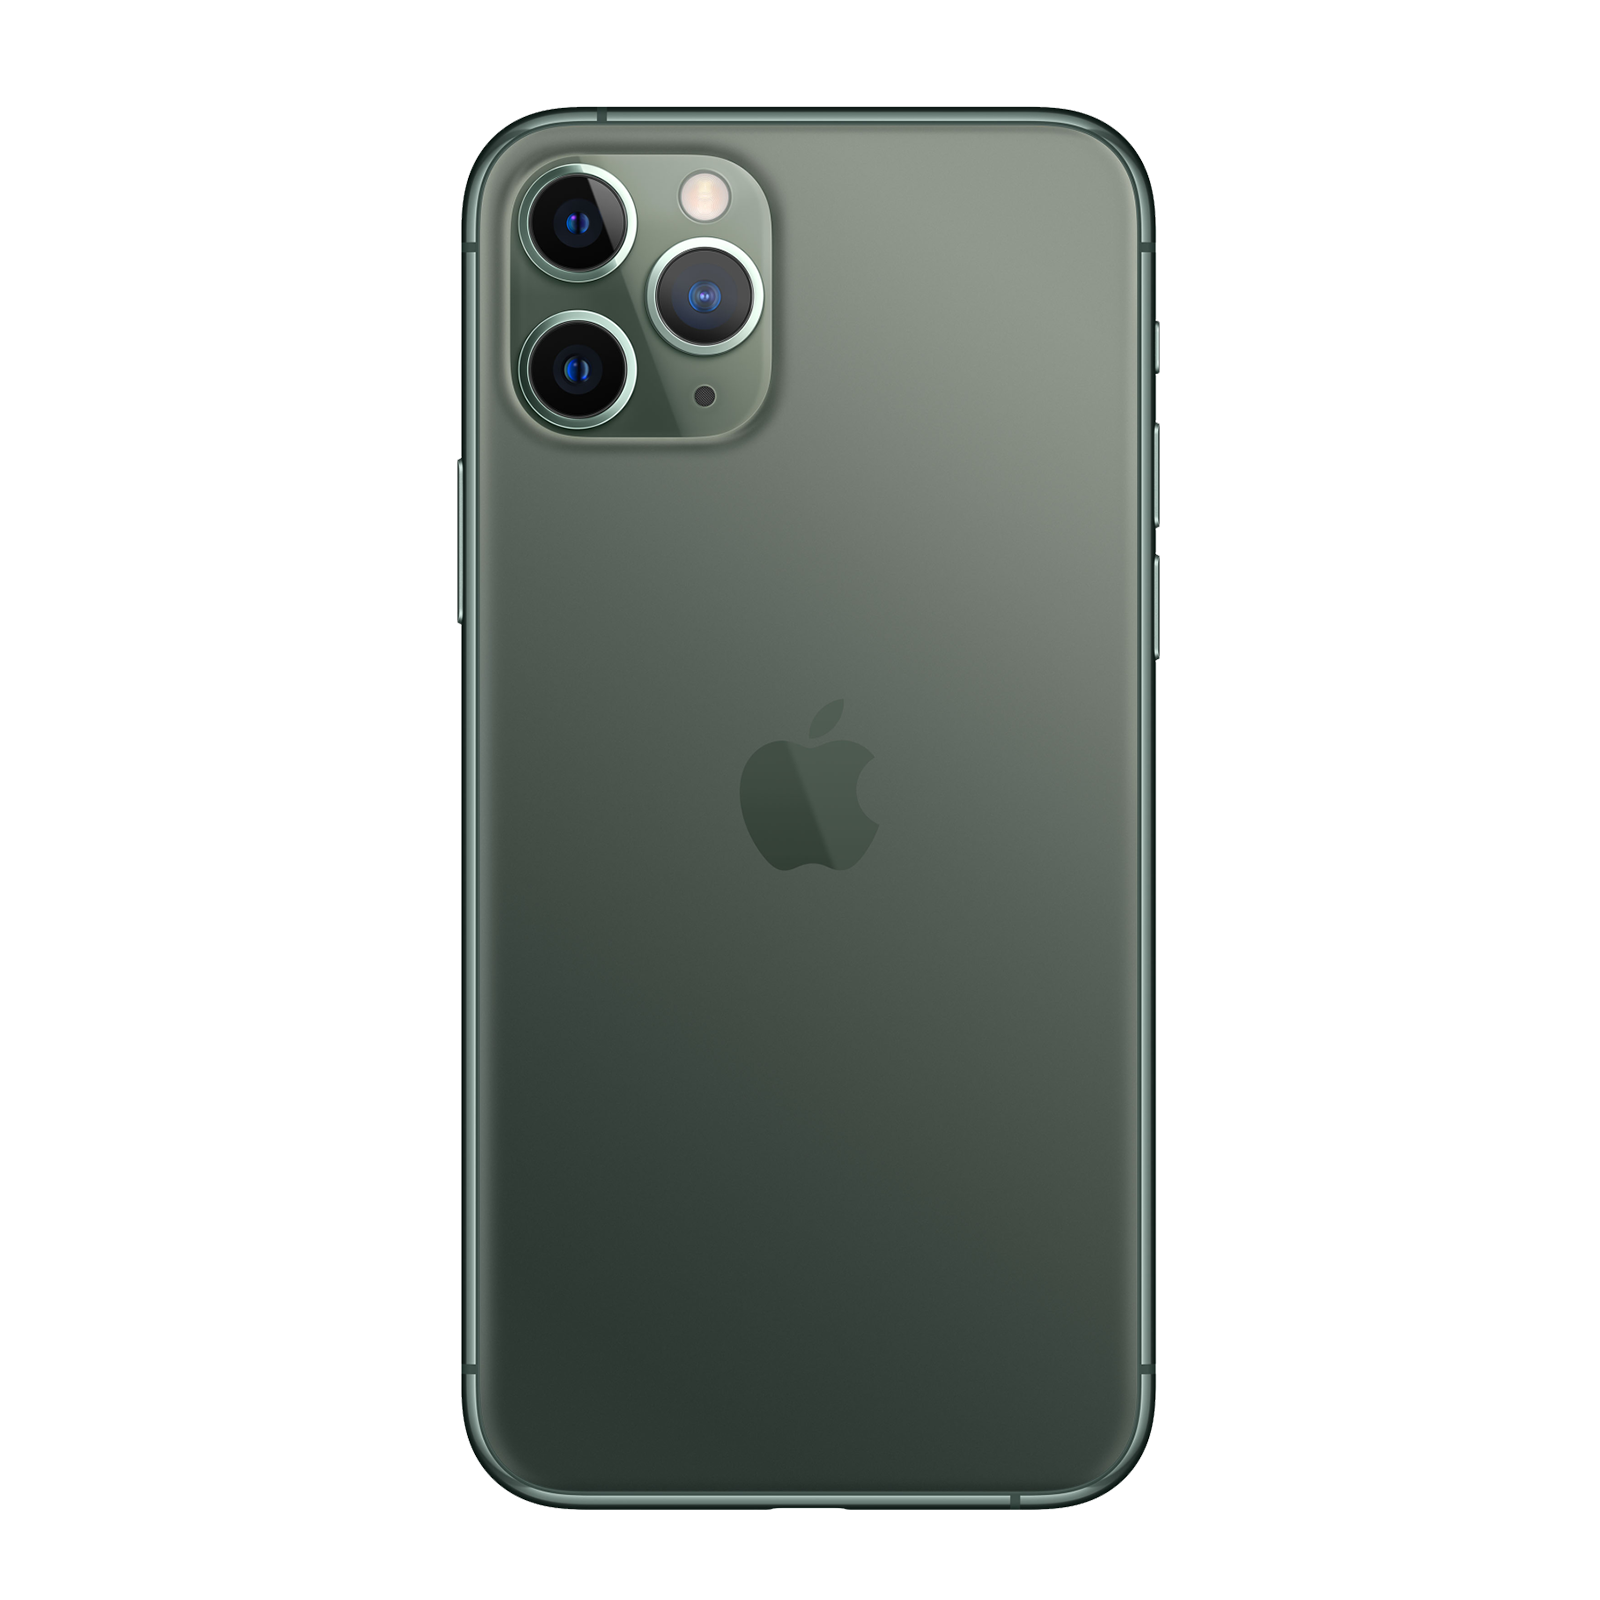 Apple iPhone 11 Pro Max 512GB Midnight Green Good - Unlocked